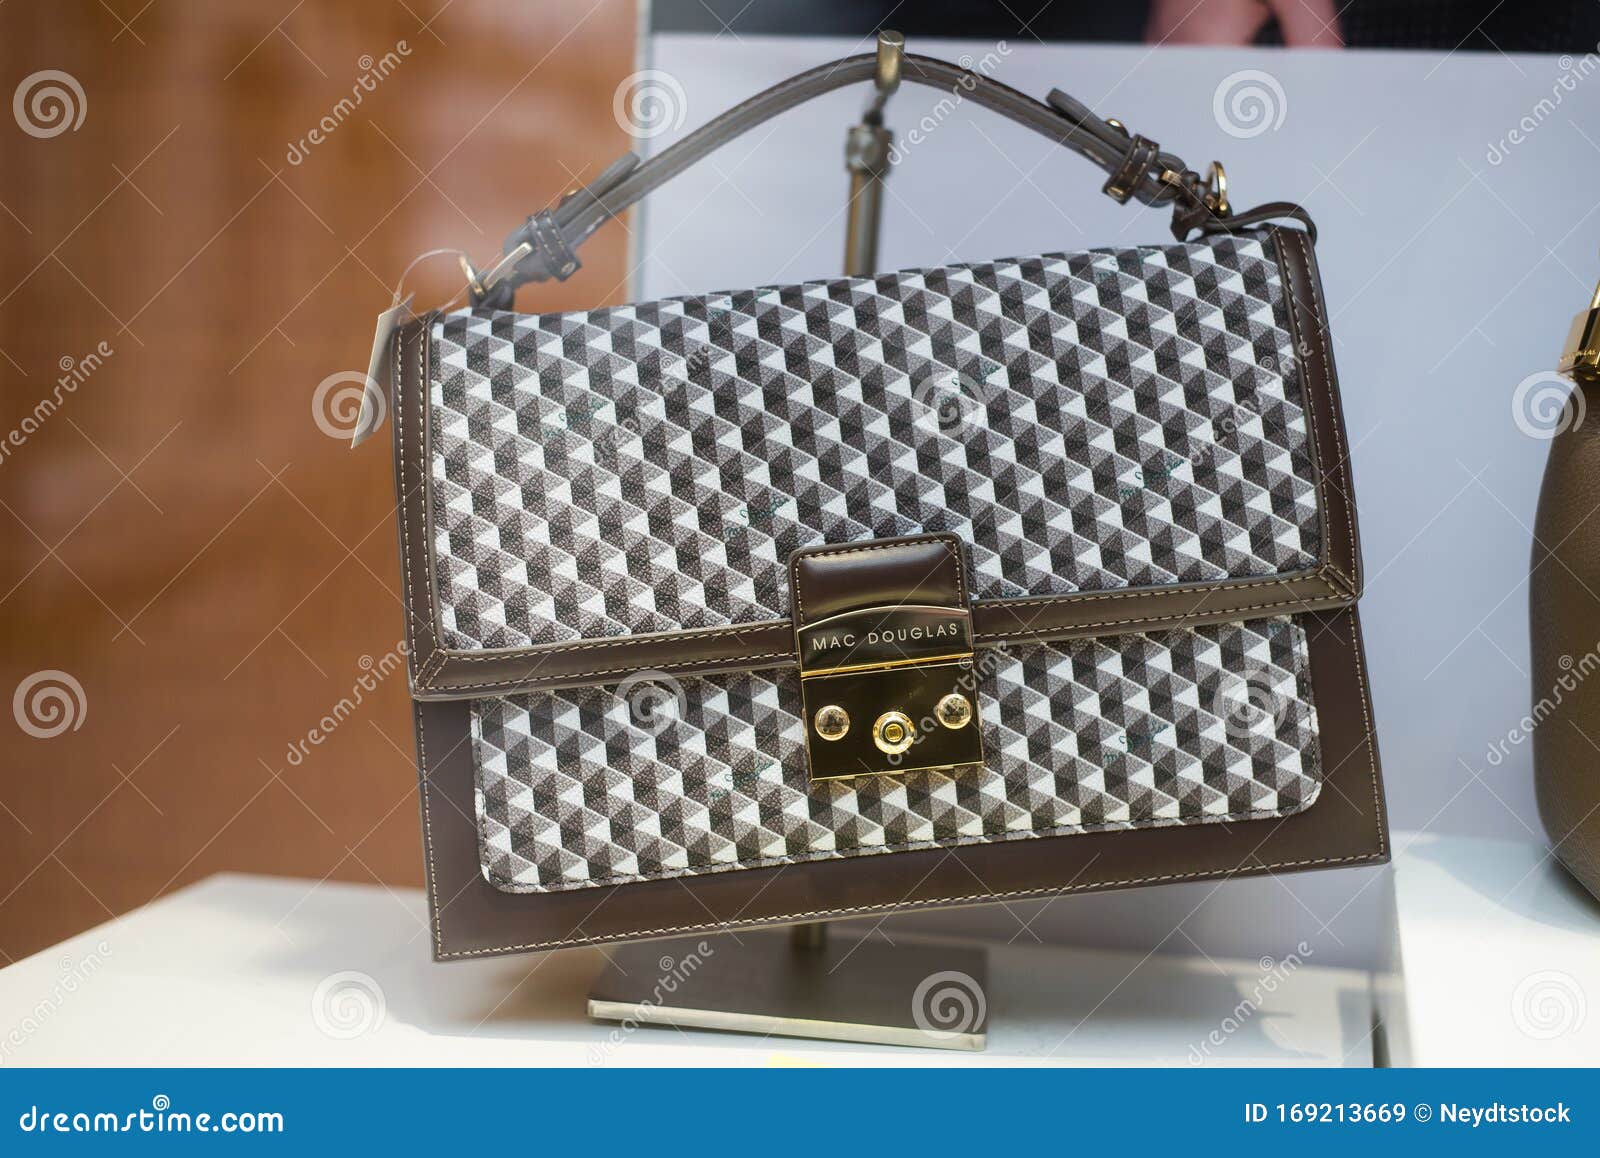 Leather Handbag by Mac Douglas in a Luxury Fashion Store Showroom ...